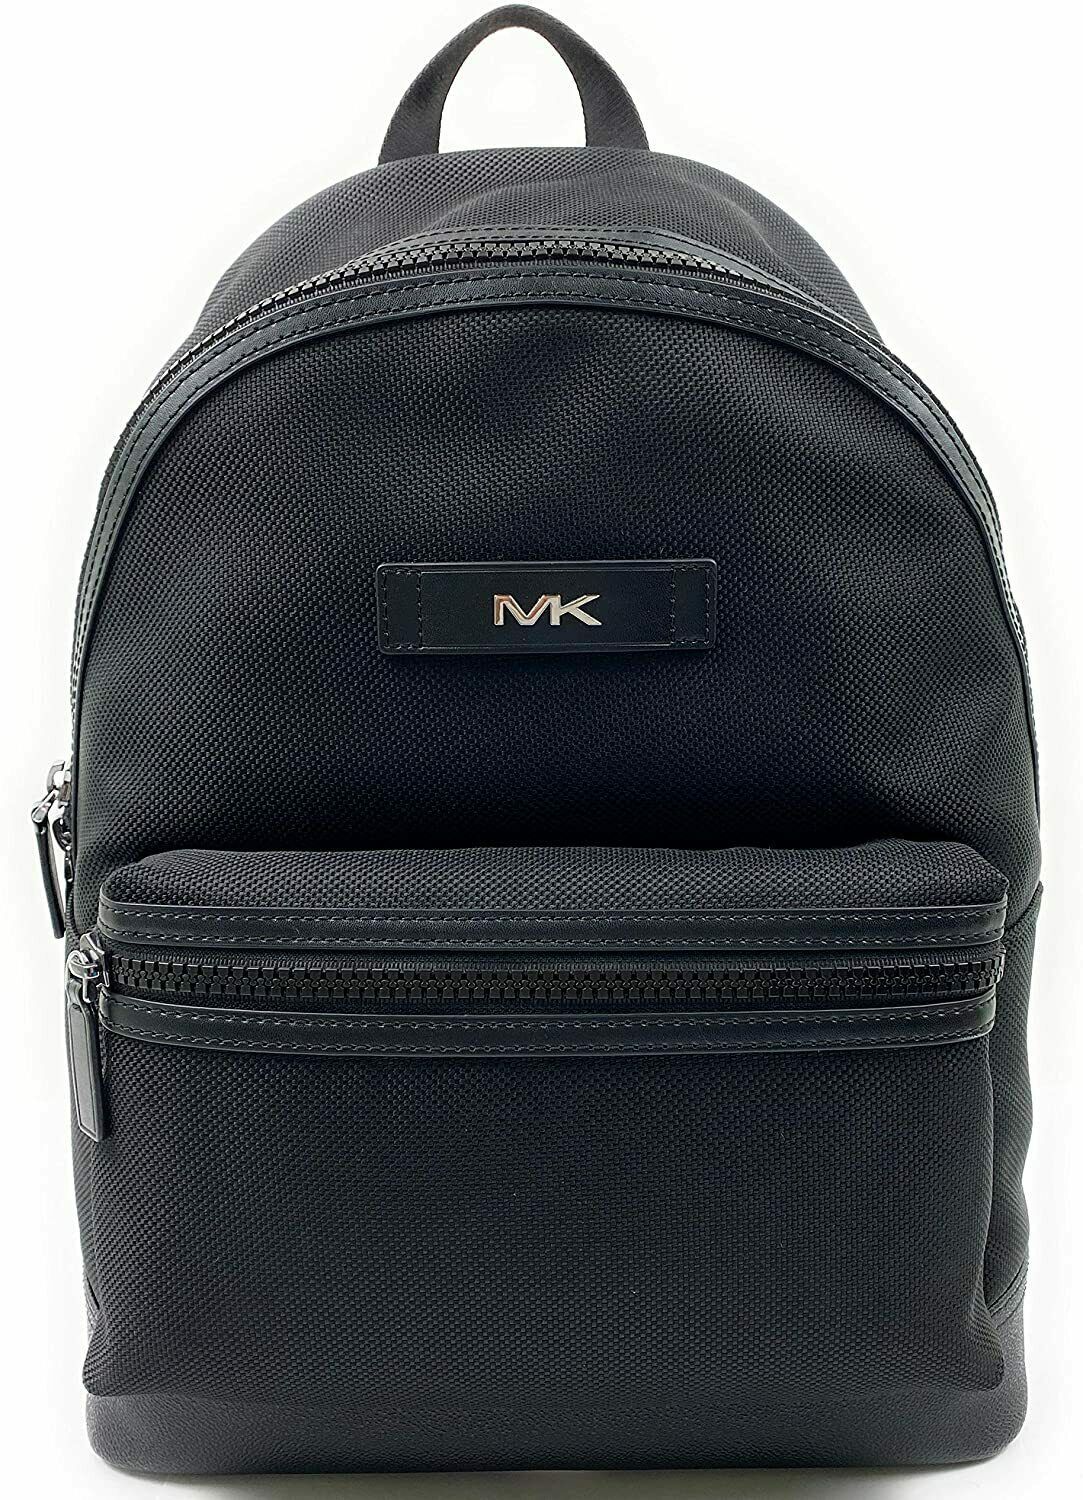 NWB Michael Kors Kent Sport Black Nylon Large Backpack 37F9LKSB2C $398 Dust Bag